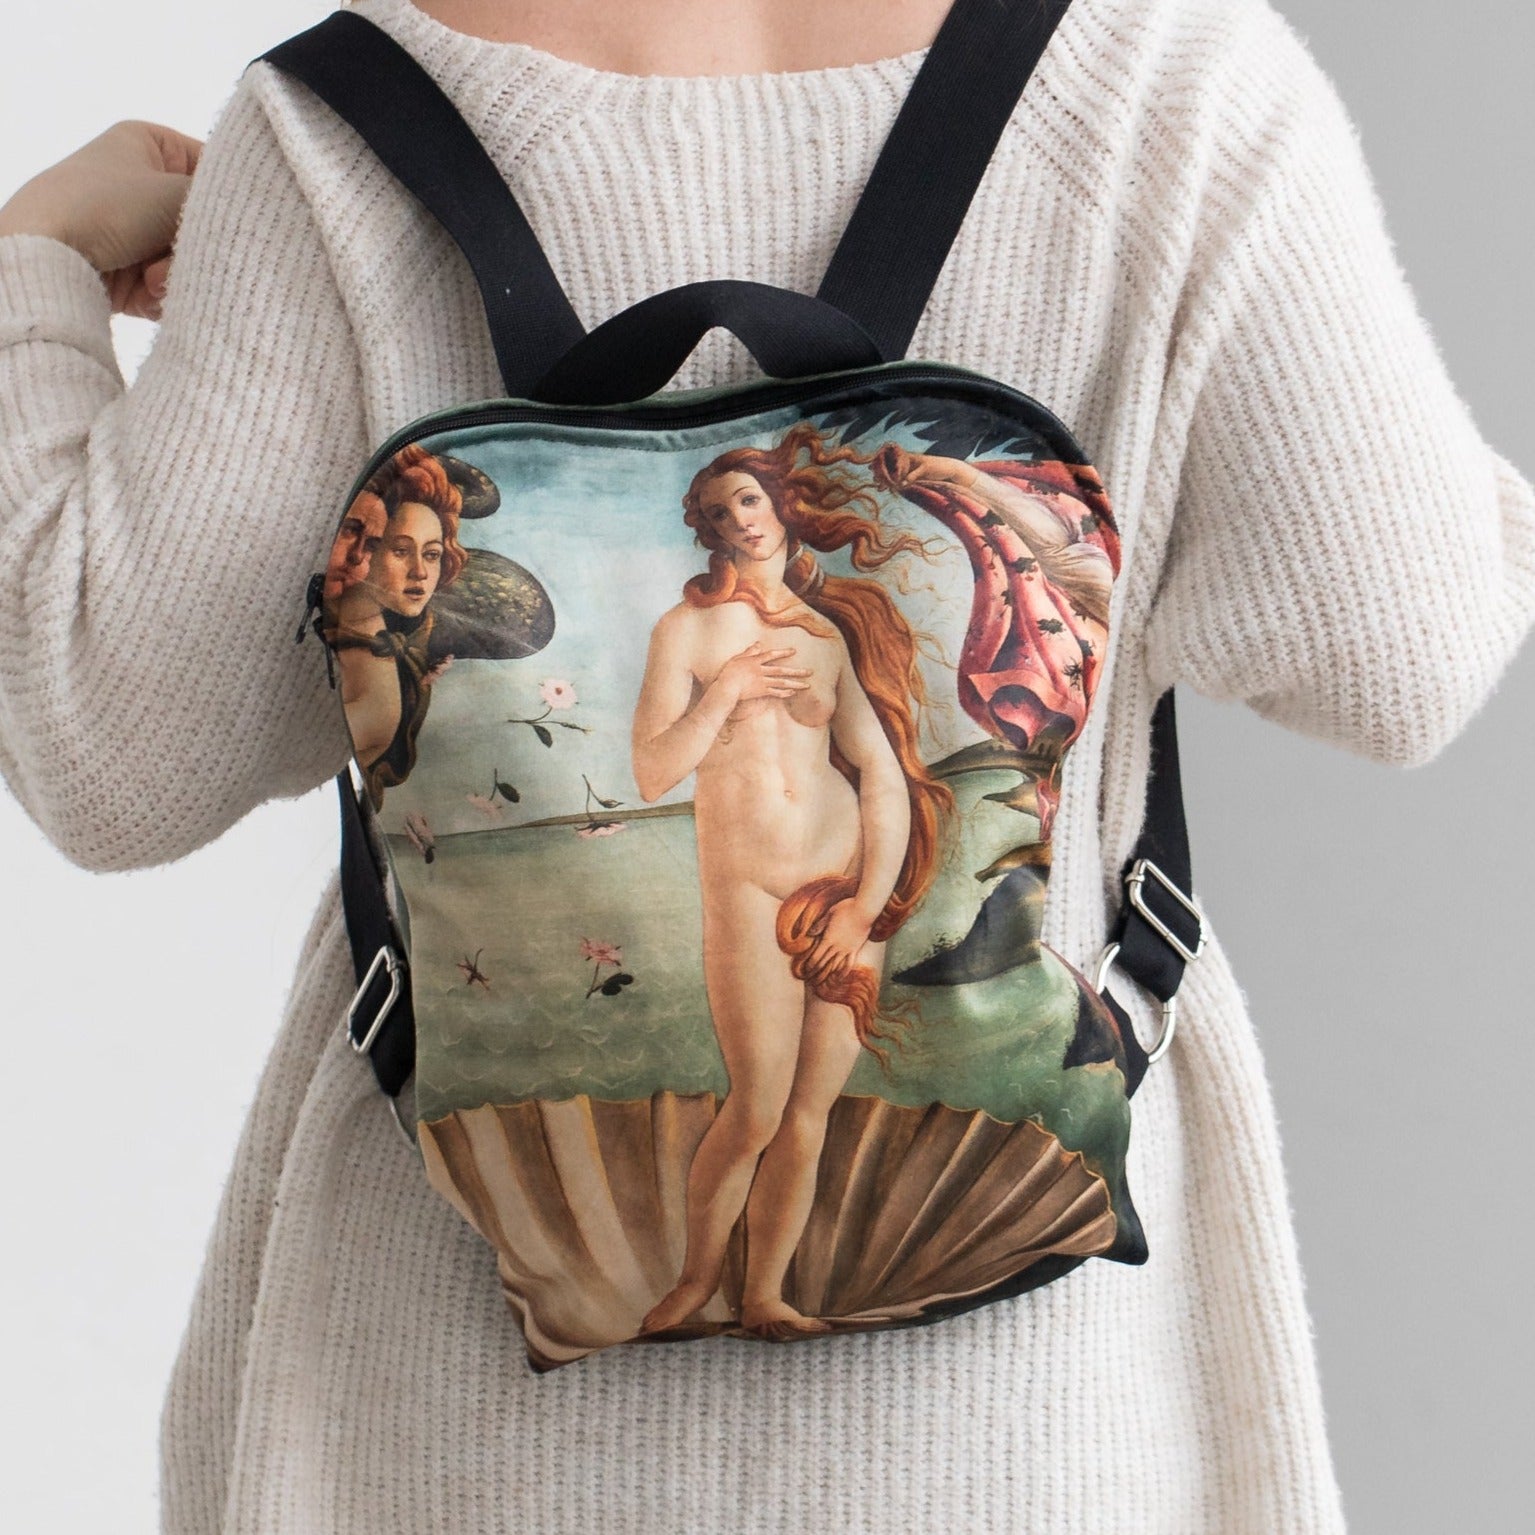 Backpack Sandro Botticelli "The Birth of Venus"